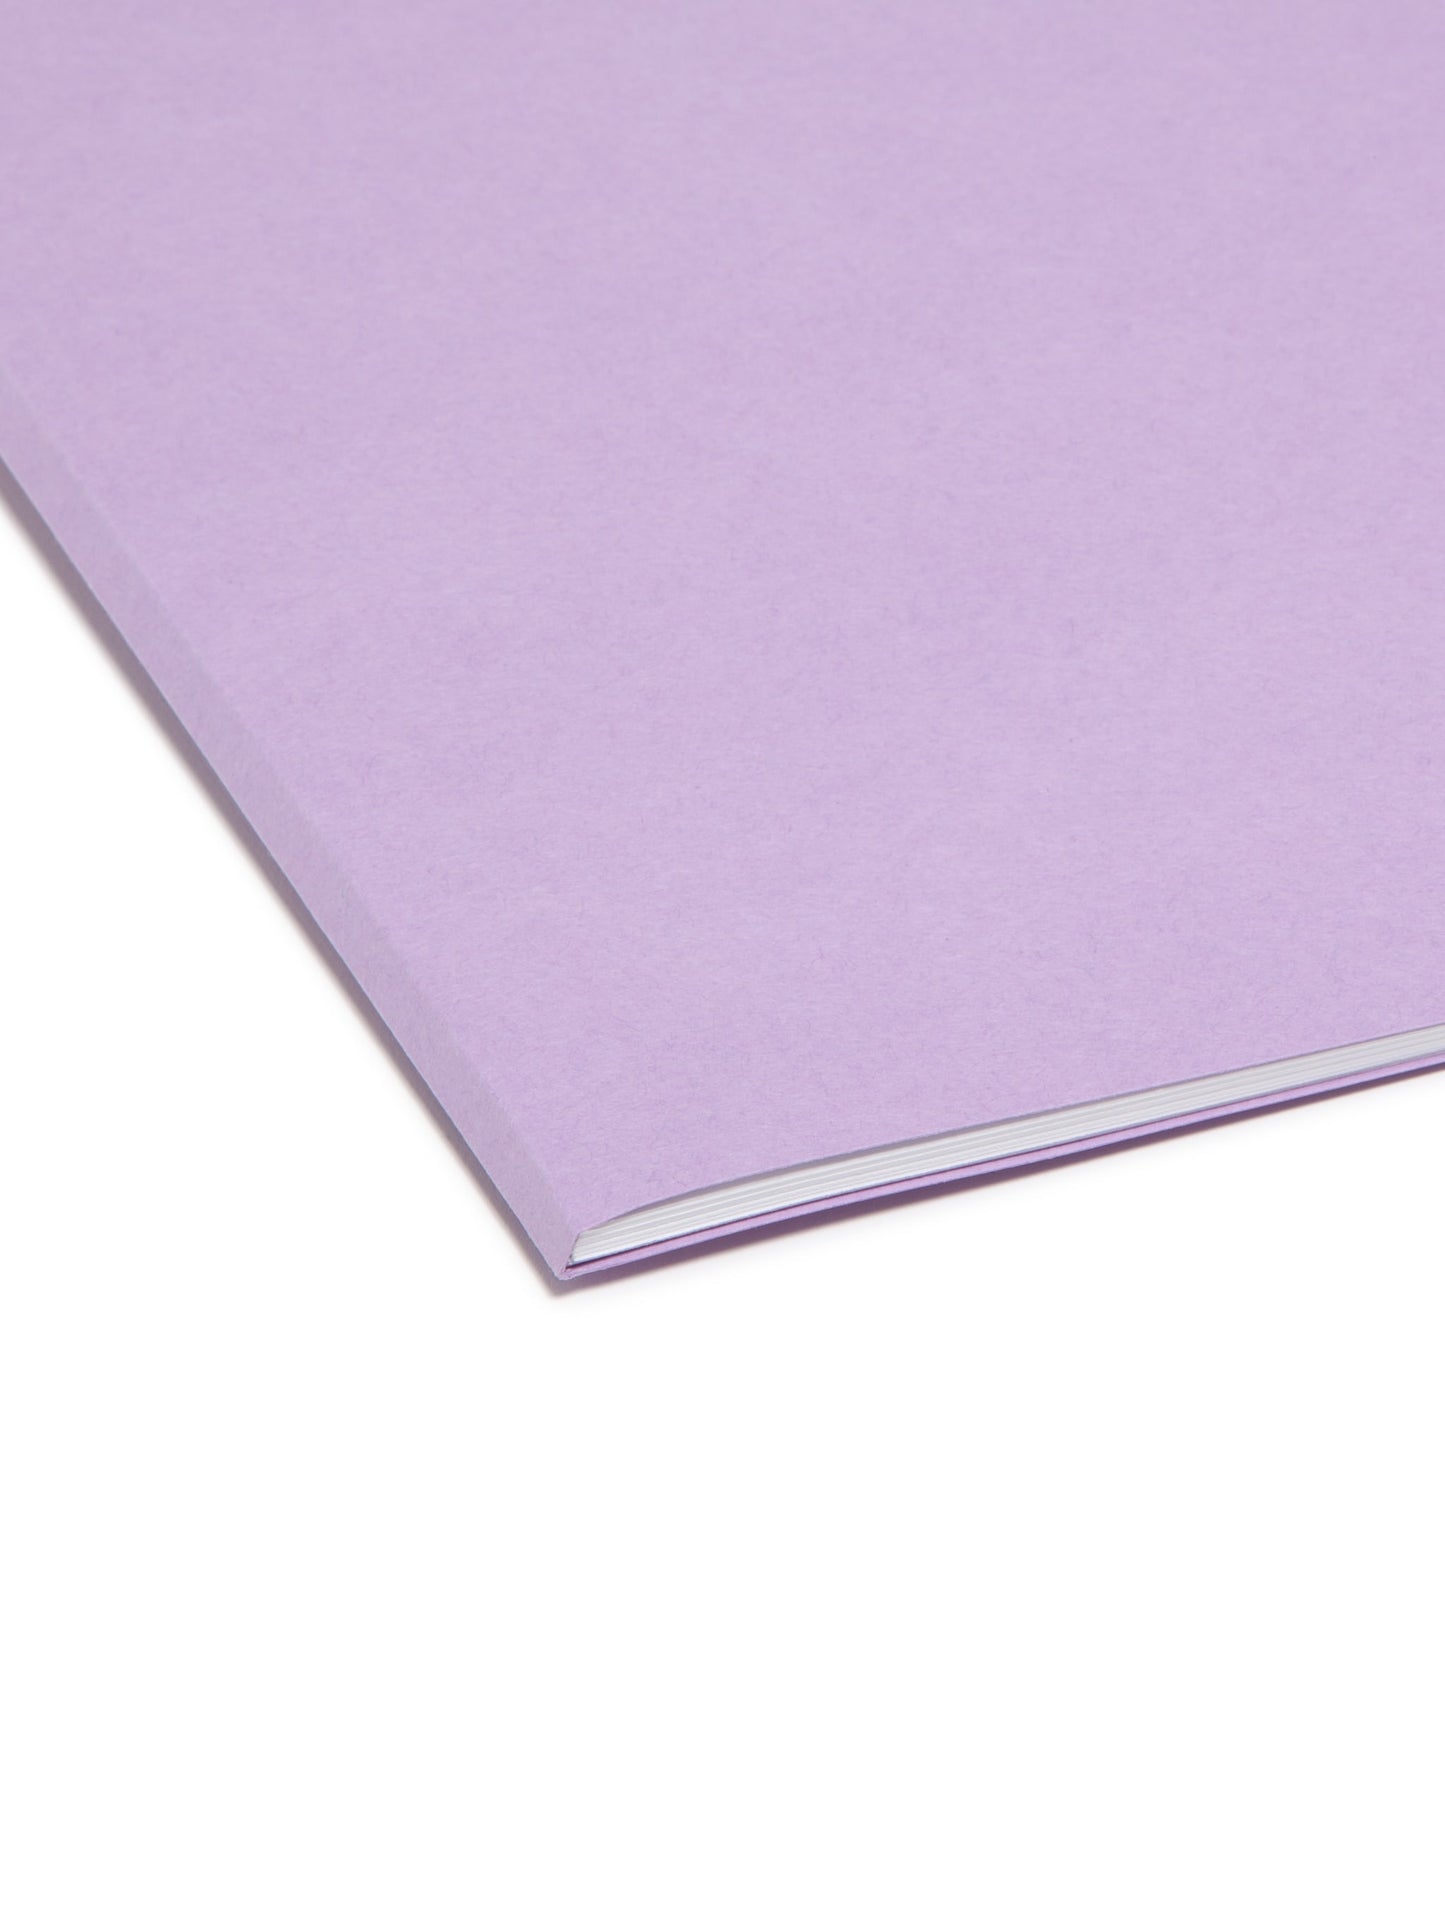 SuperTab® File Folders, 1/2-Cut Tab, Assorted Colors Color, Letter Size, Set of 100, 086486119061